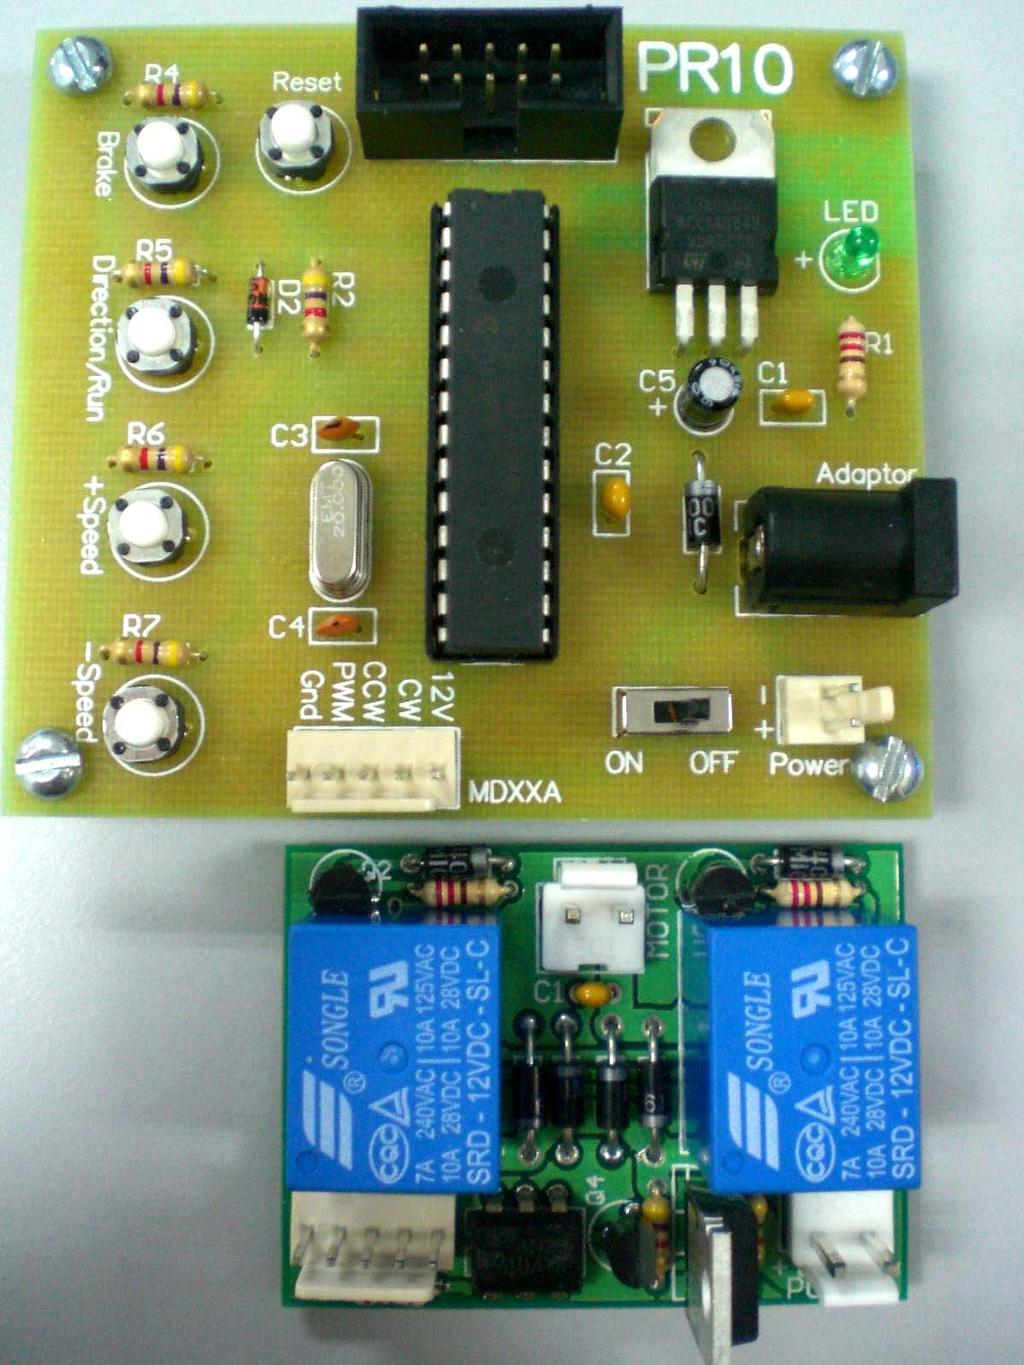 Appendix A PCB Layout: 4K7 Box header LM7805 4K7 LED 3mm 4K7 1N4148 Diode 4K7 C-cap 30pF PIC16F876A E-cap 10uF 16V C-cap 104 220R 4K7 20MHz Crystal C-cap